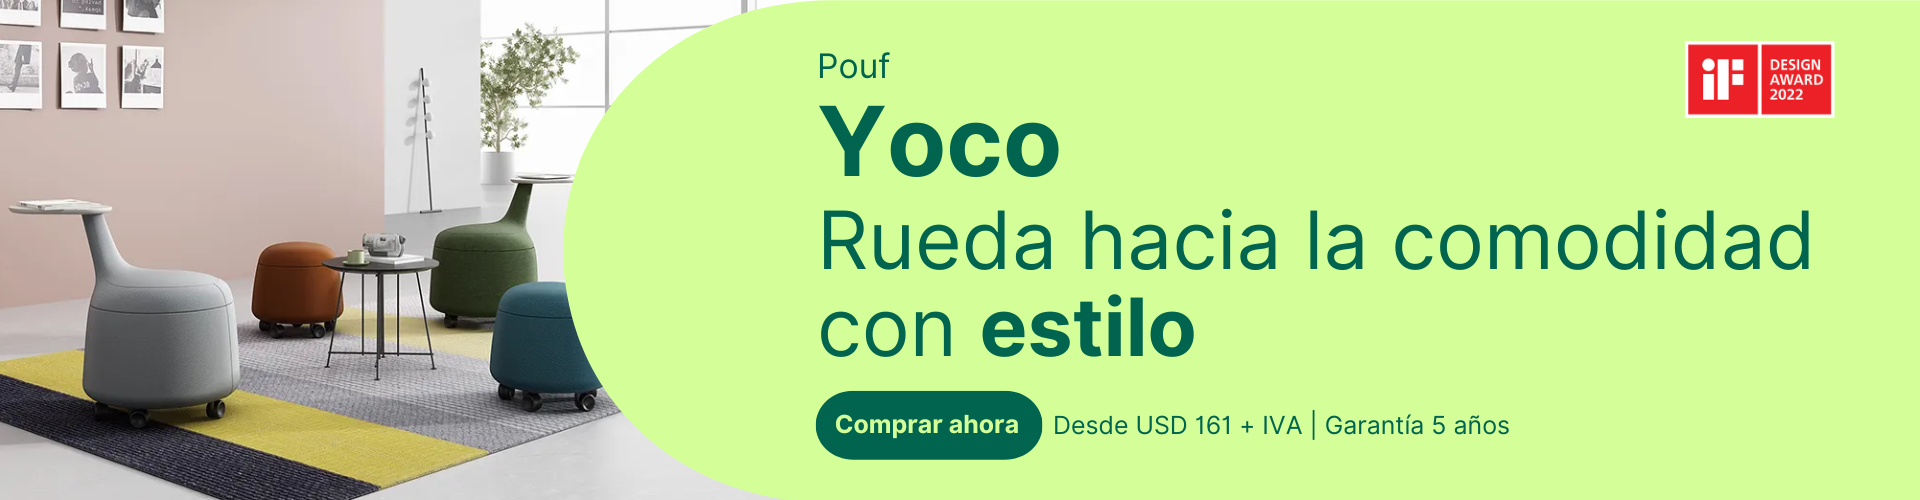 Banner Yoco con Precio